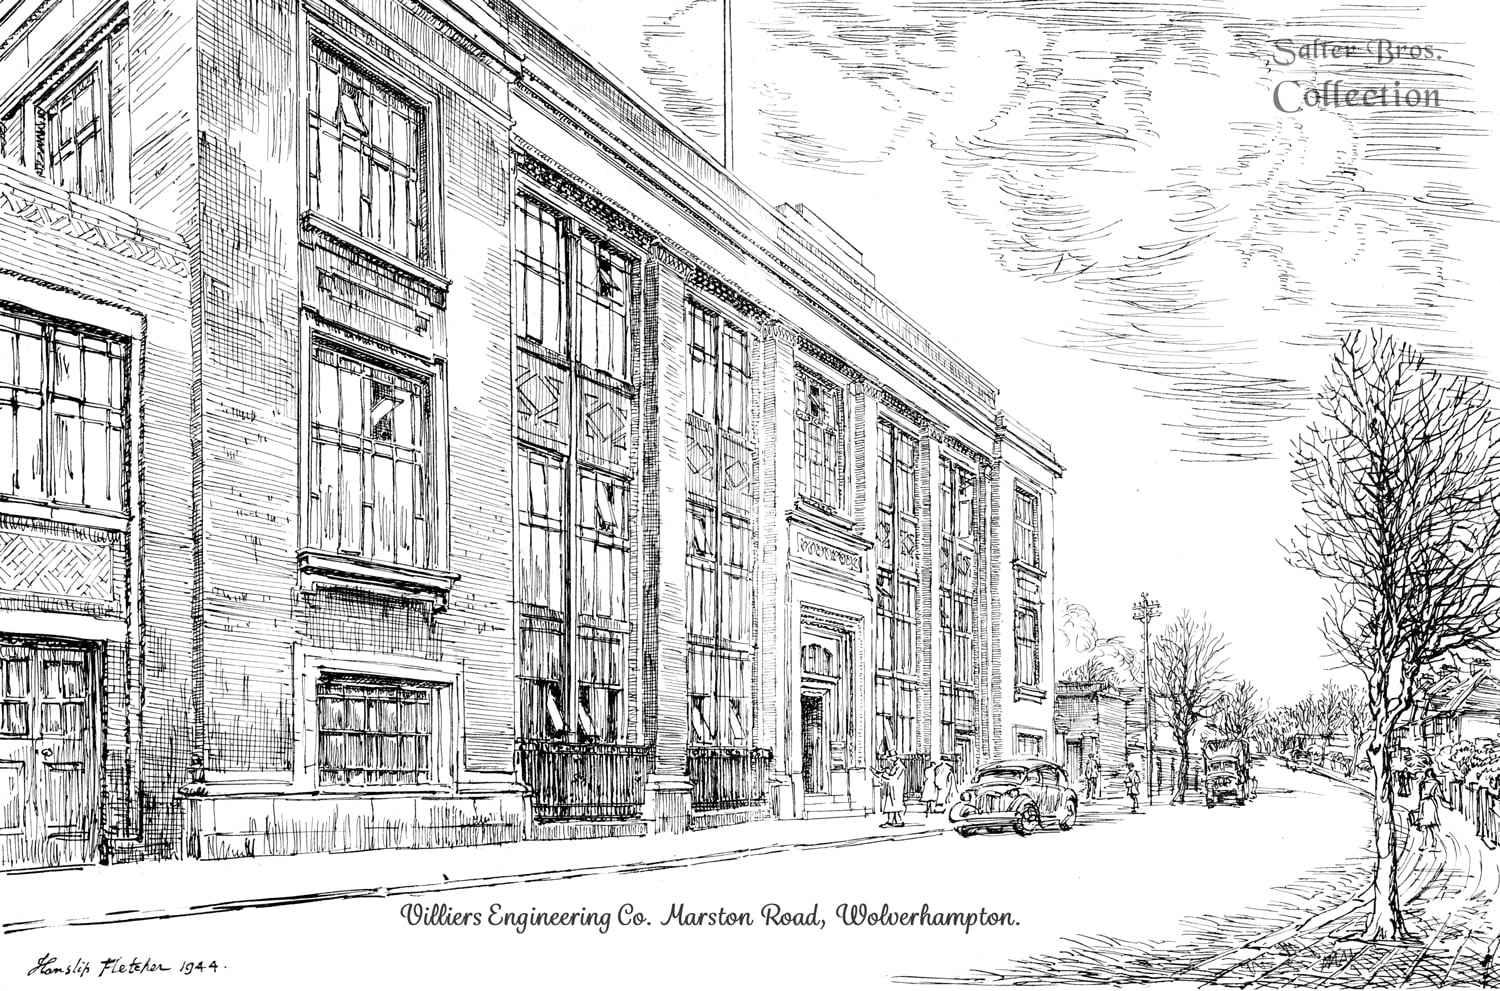 Villiers Engineering Co, Sketch - 1944